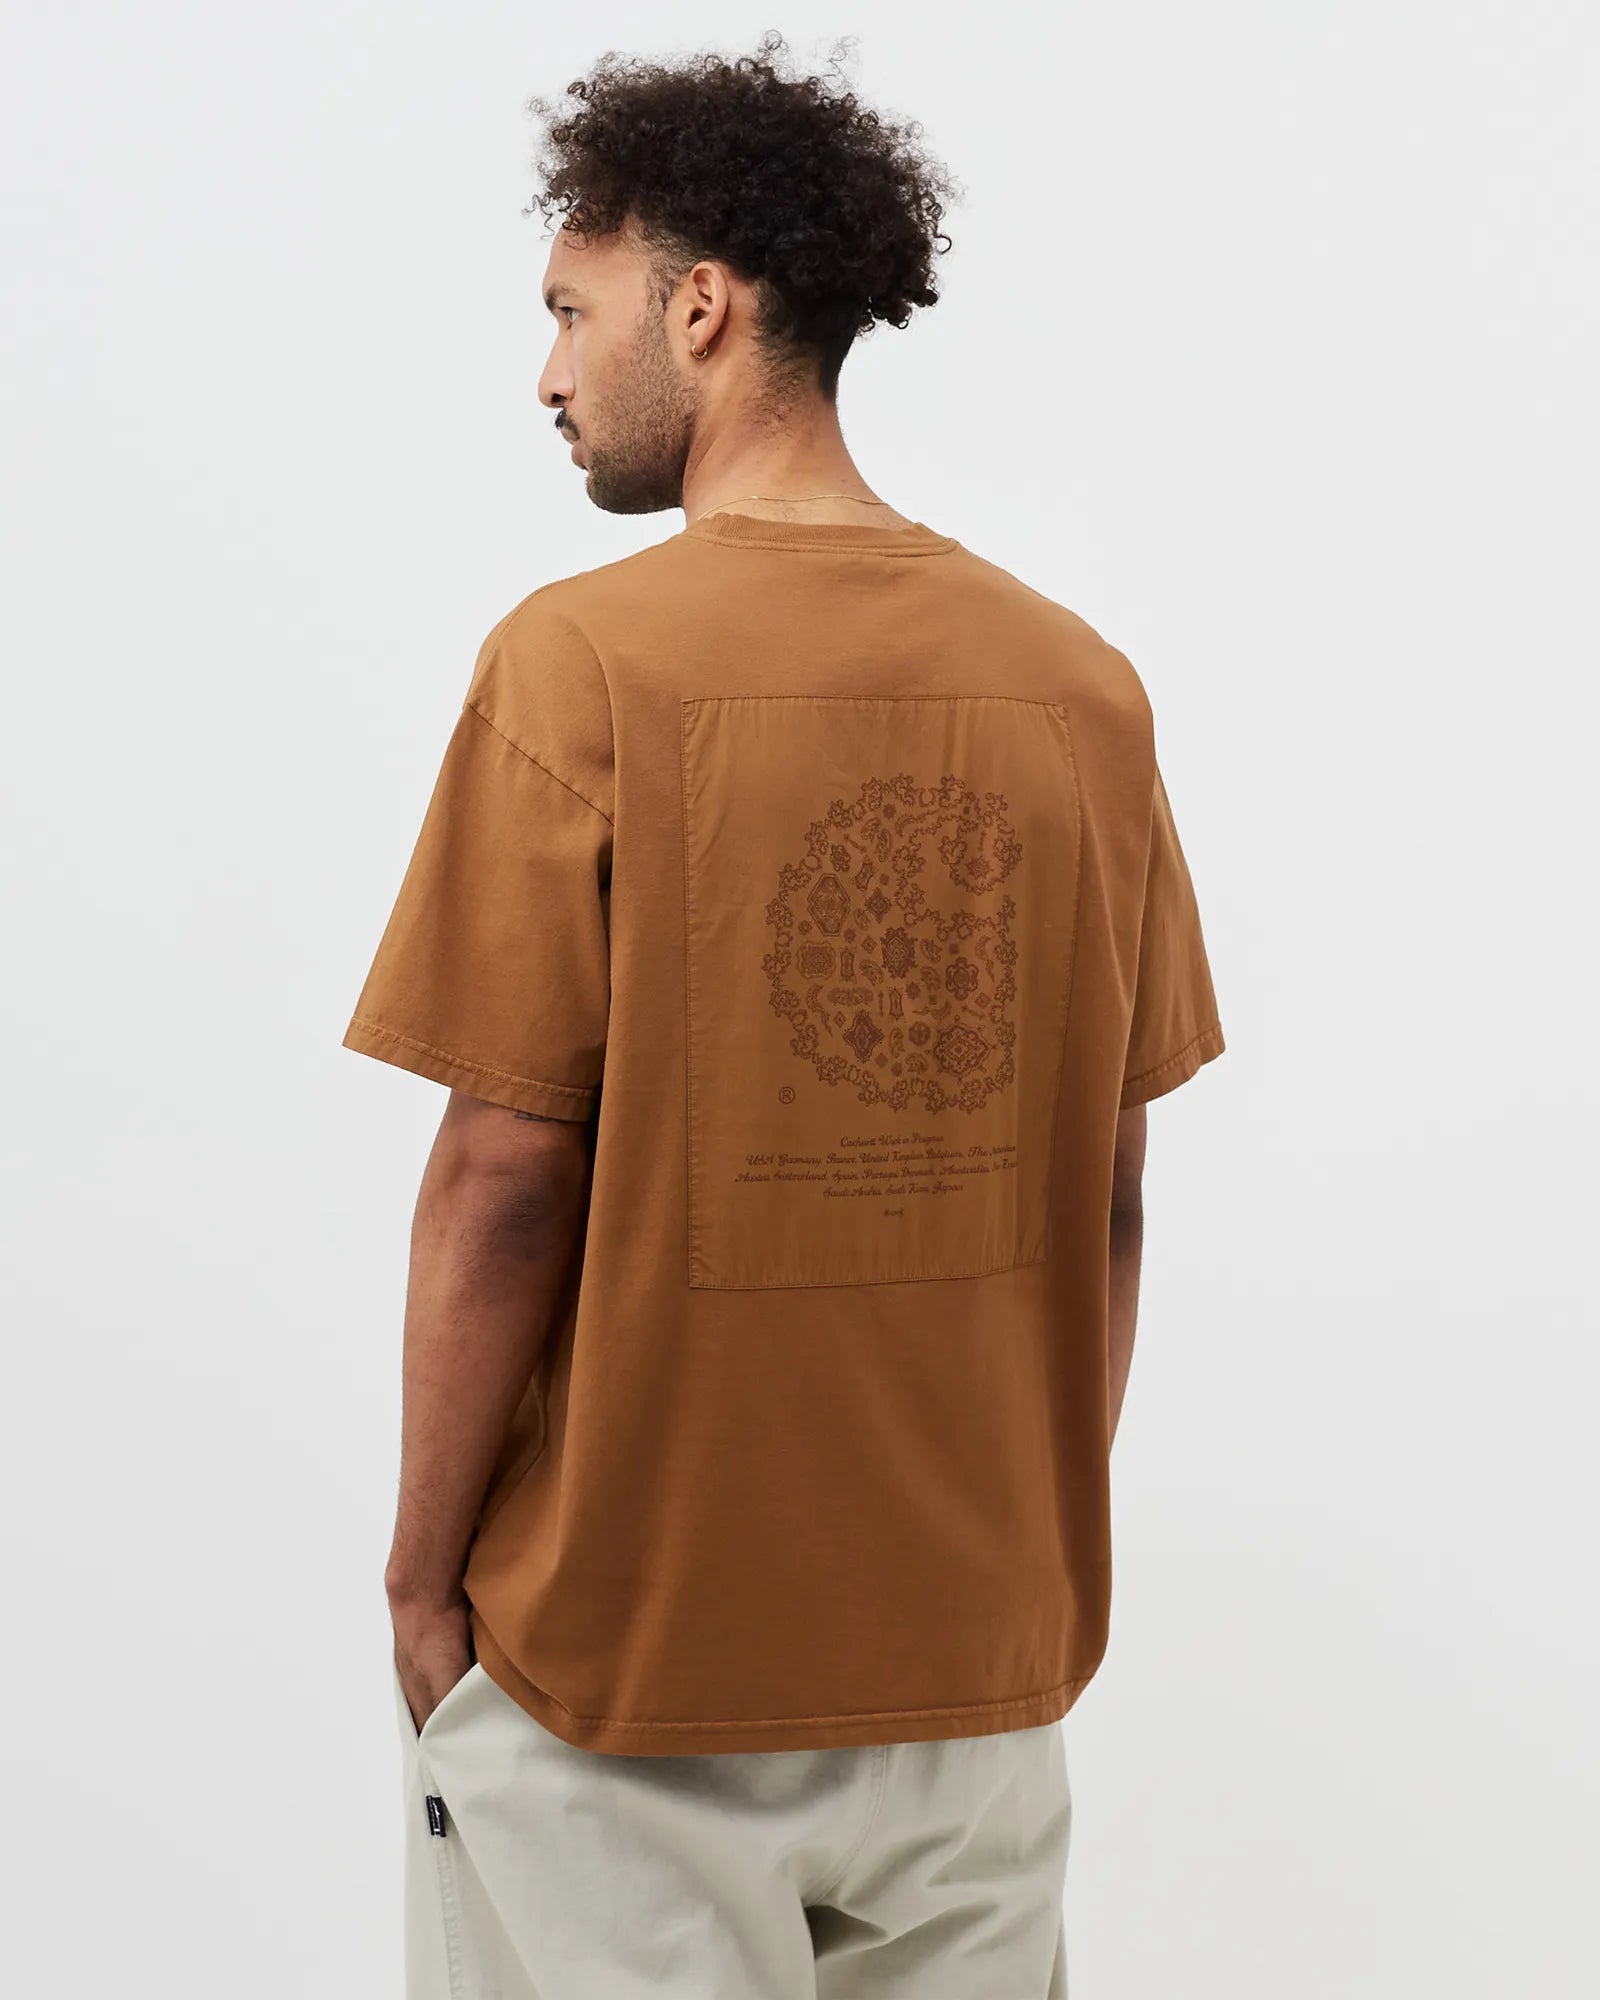 S/S Verse Patch T-Shirt (Hamilton Brown - Garment dyed)